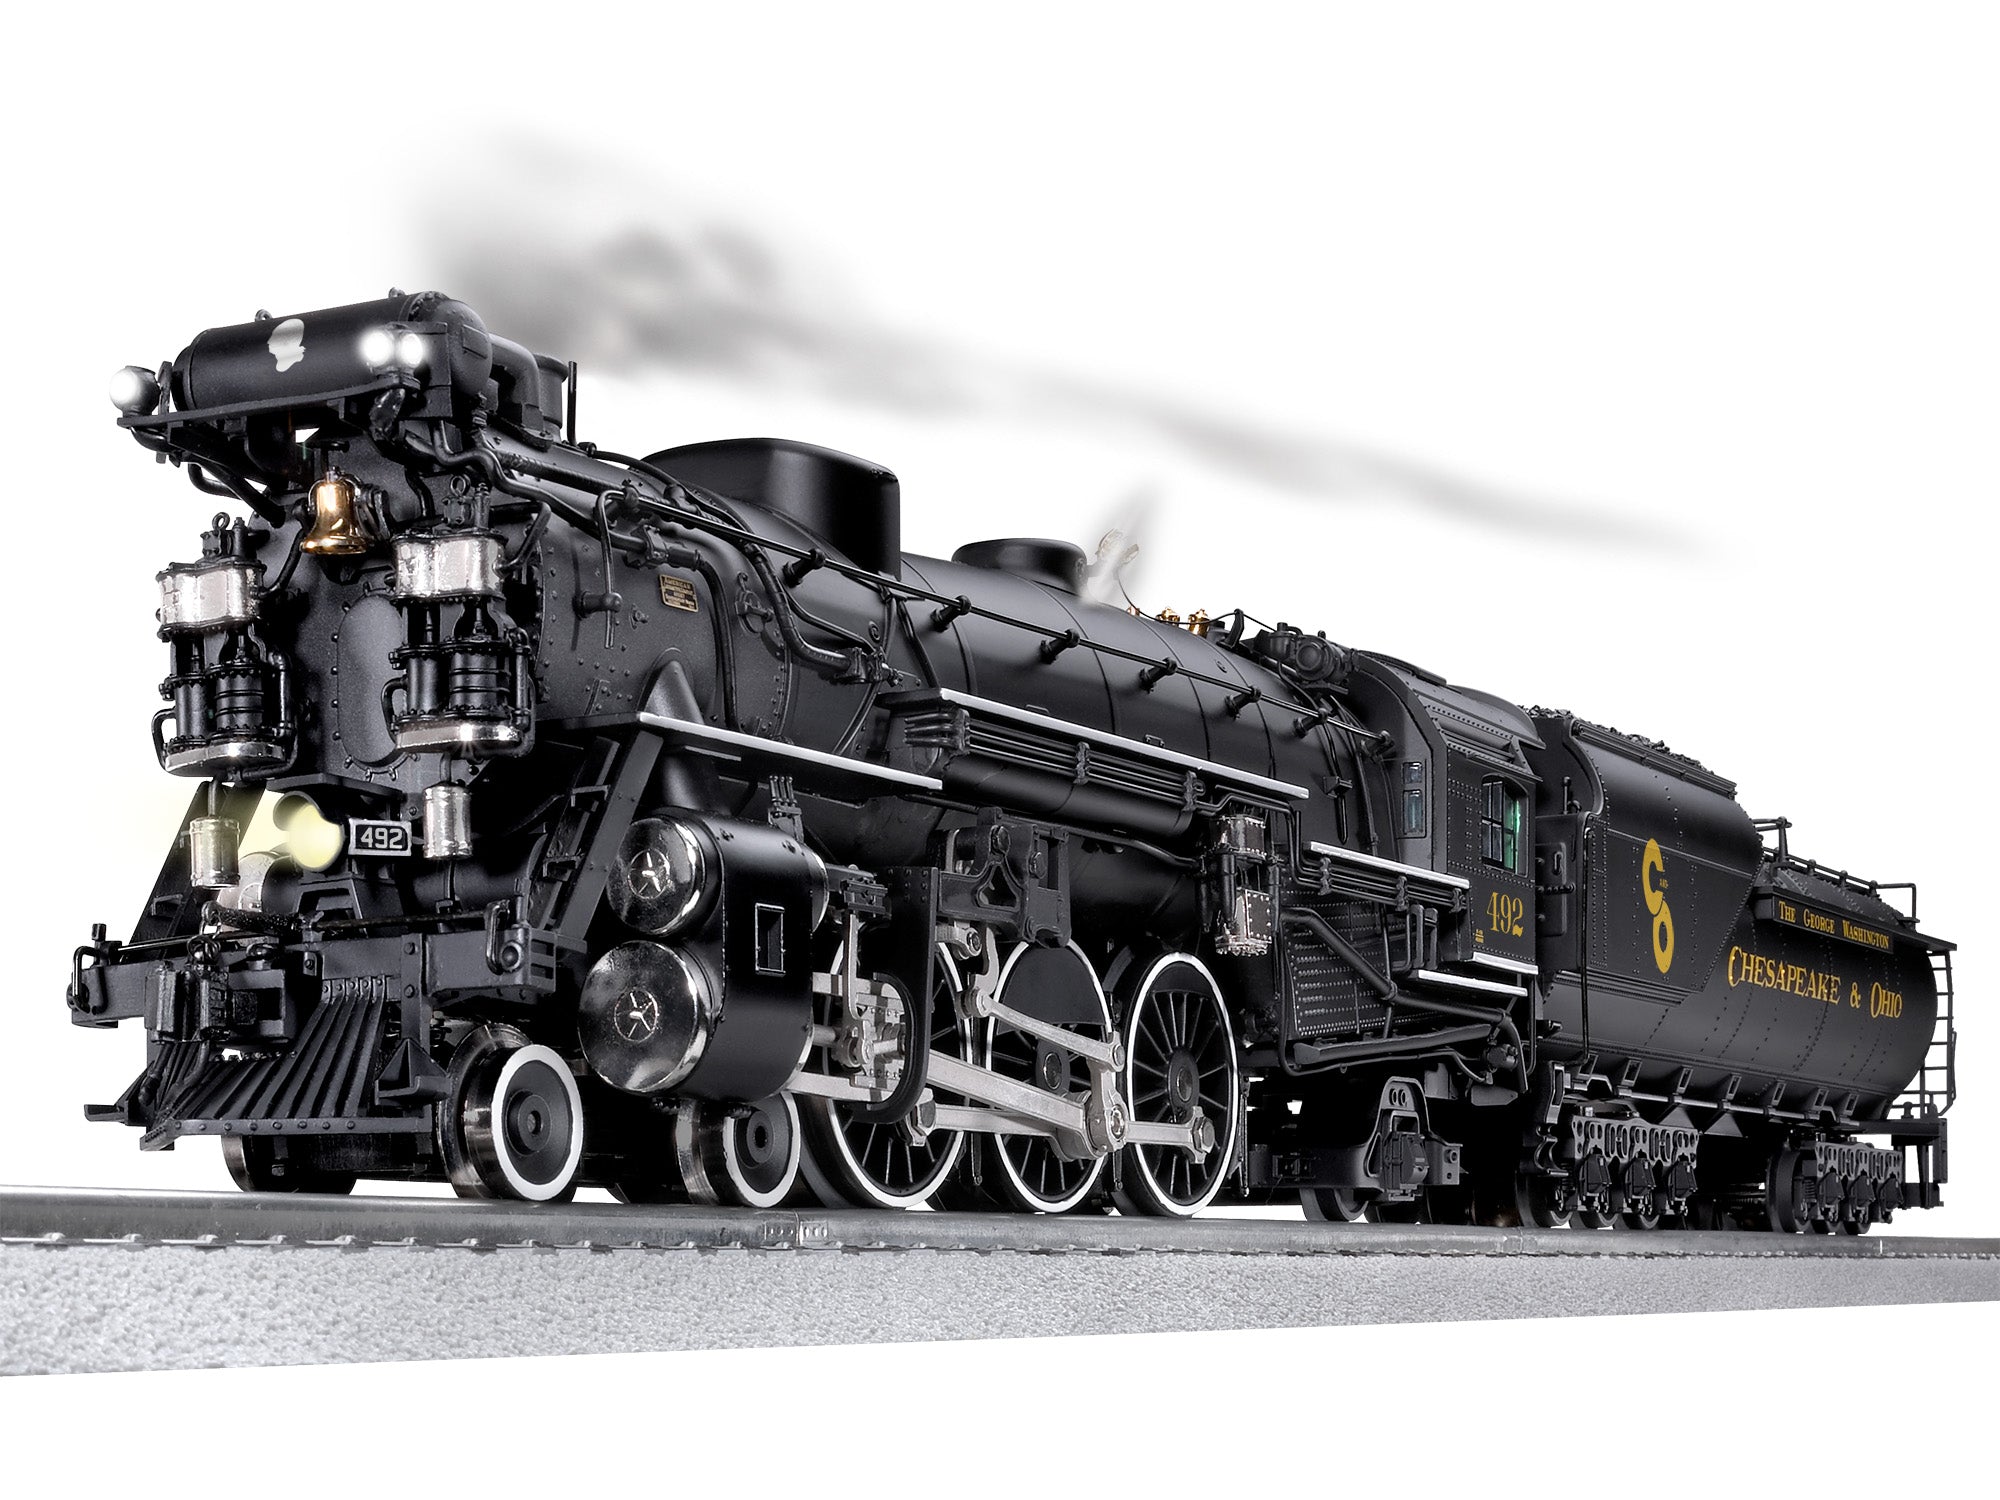 Lionel 2431160 - Legacy F19 Pacific Steam Engine "Chesapeake & Ohio" #492 (George Washington)